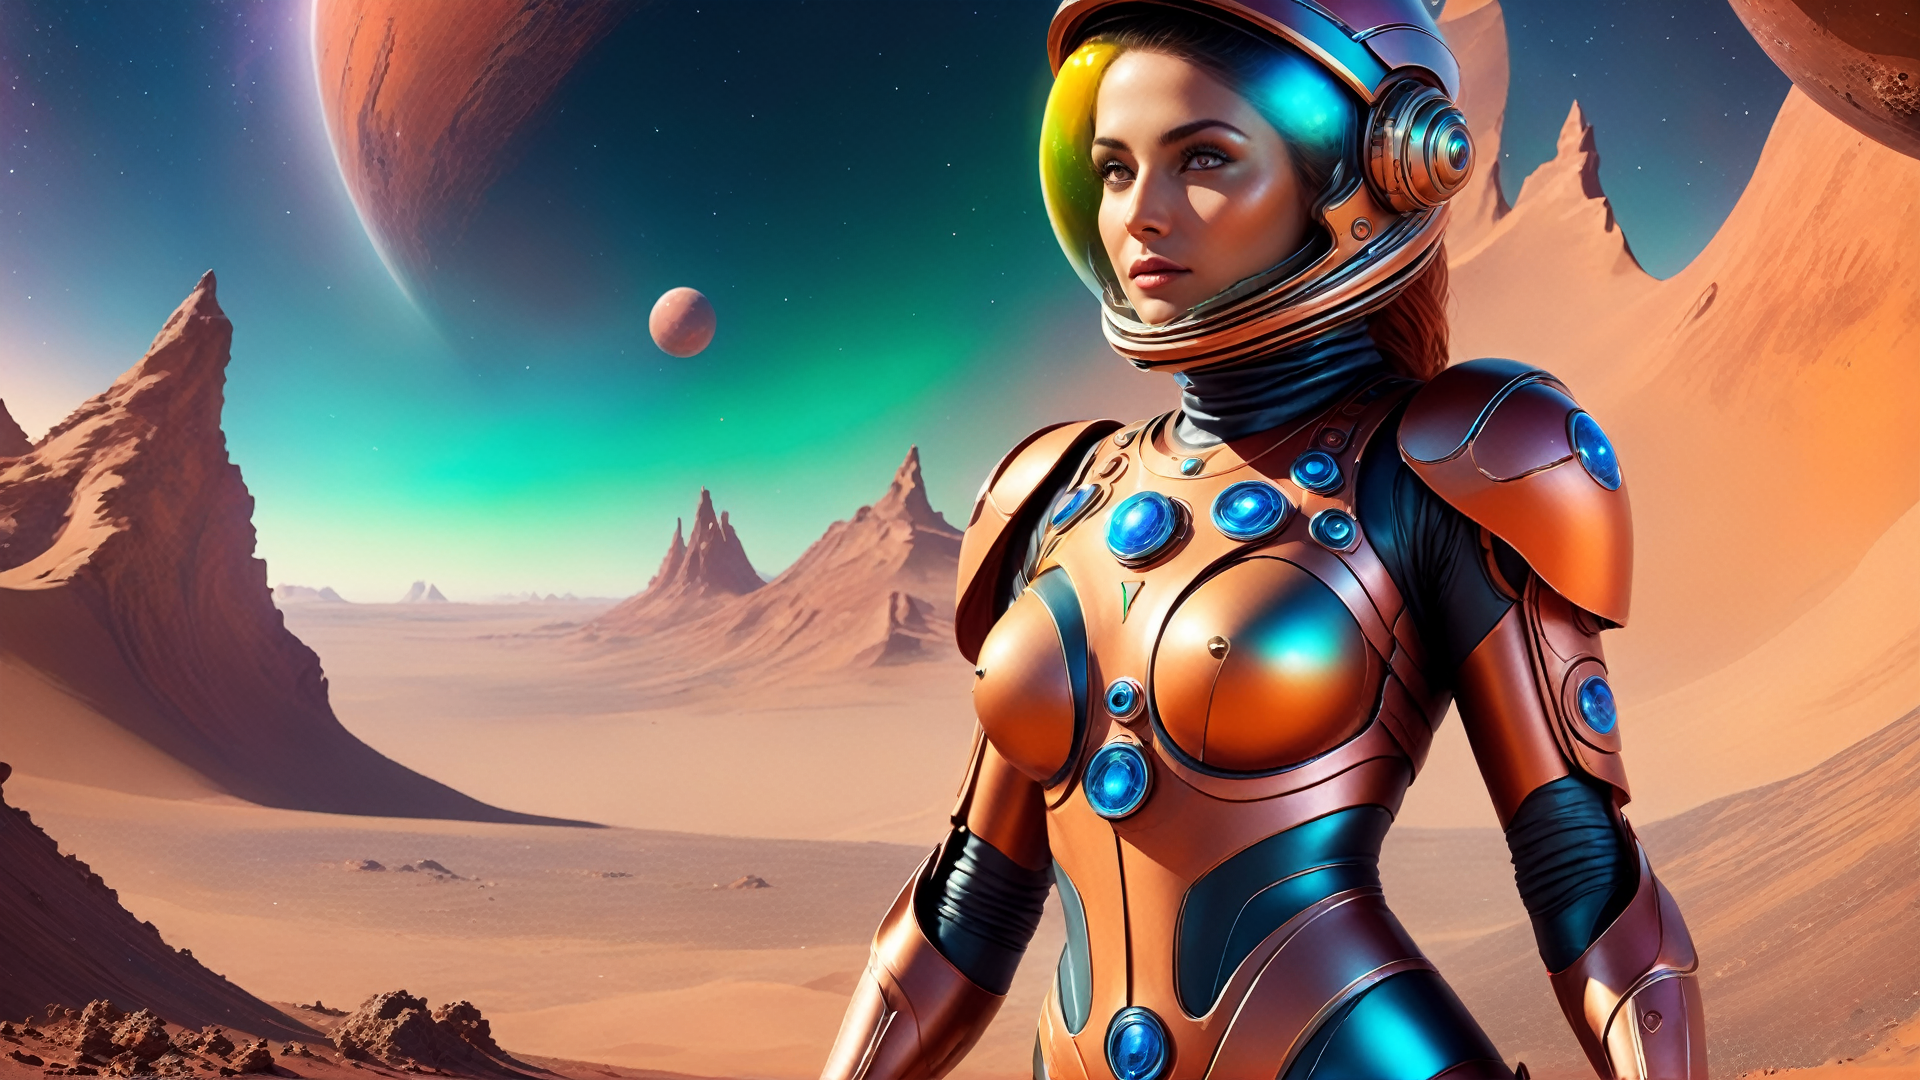 General 1920x1080 AI art women colorful space desert CGI sky stars planet spacesuit digital art looking at viewer